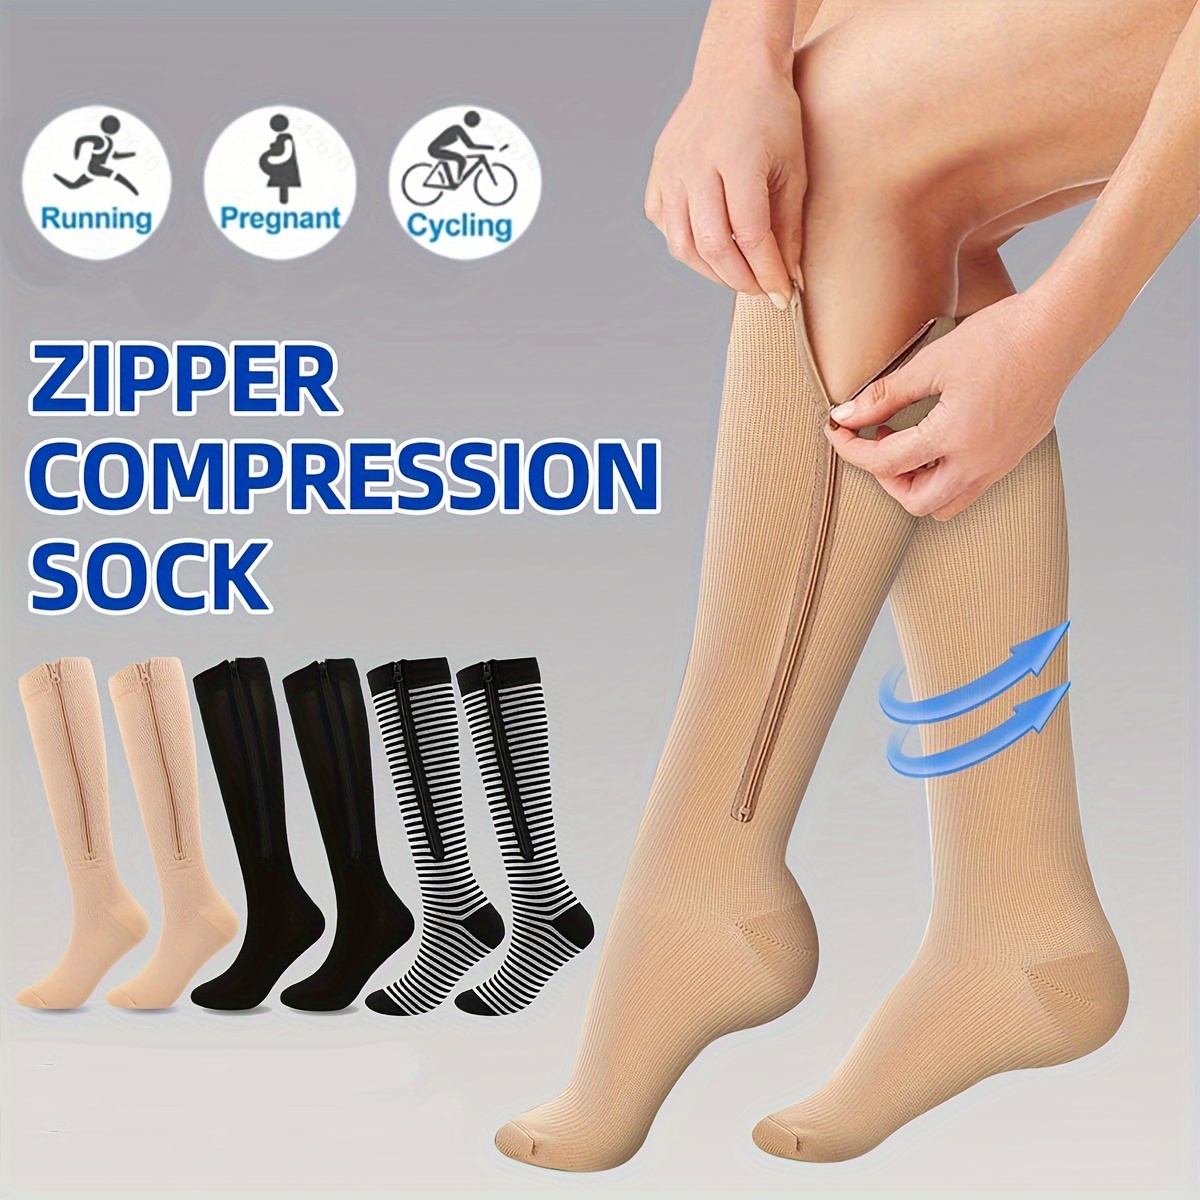 20 30mmhg Compression Socks Zipper Running Solid Ribbed Knee